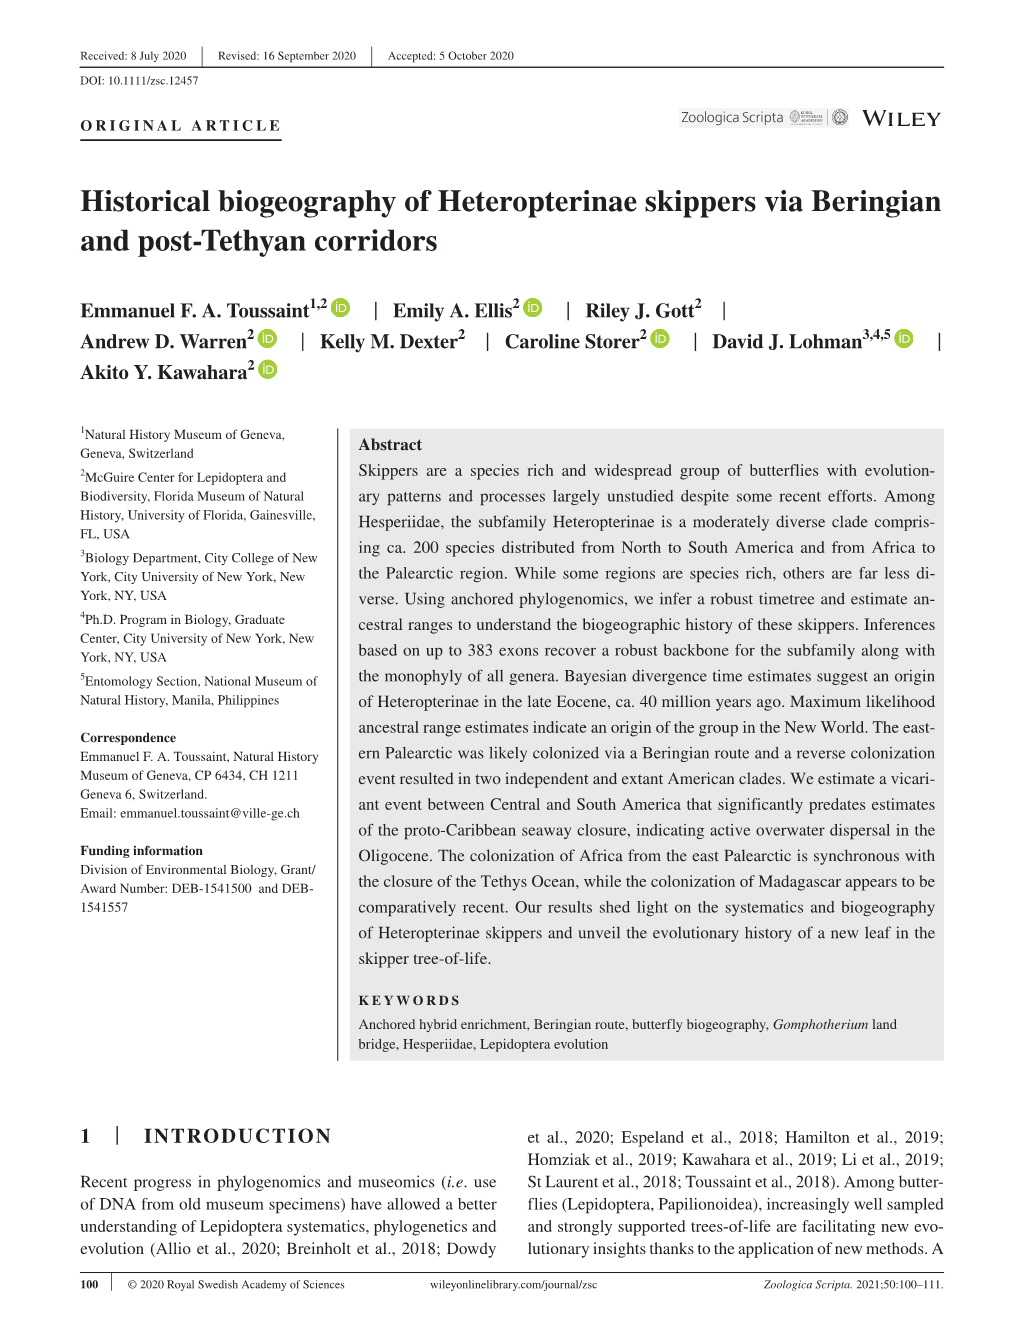 Historical Biogeography of Heteropterinae Skippers Via Beringian and Post-Tethyan Corridors